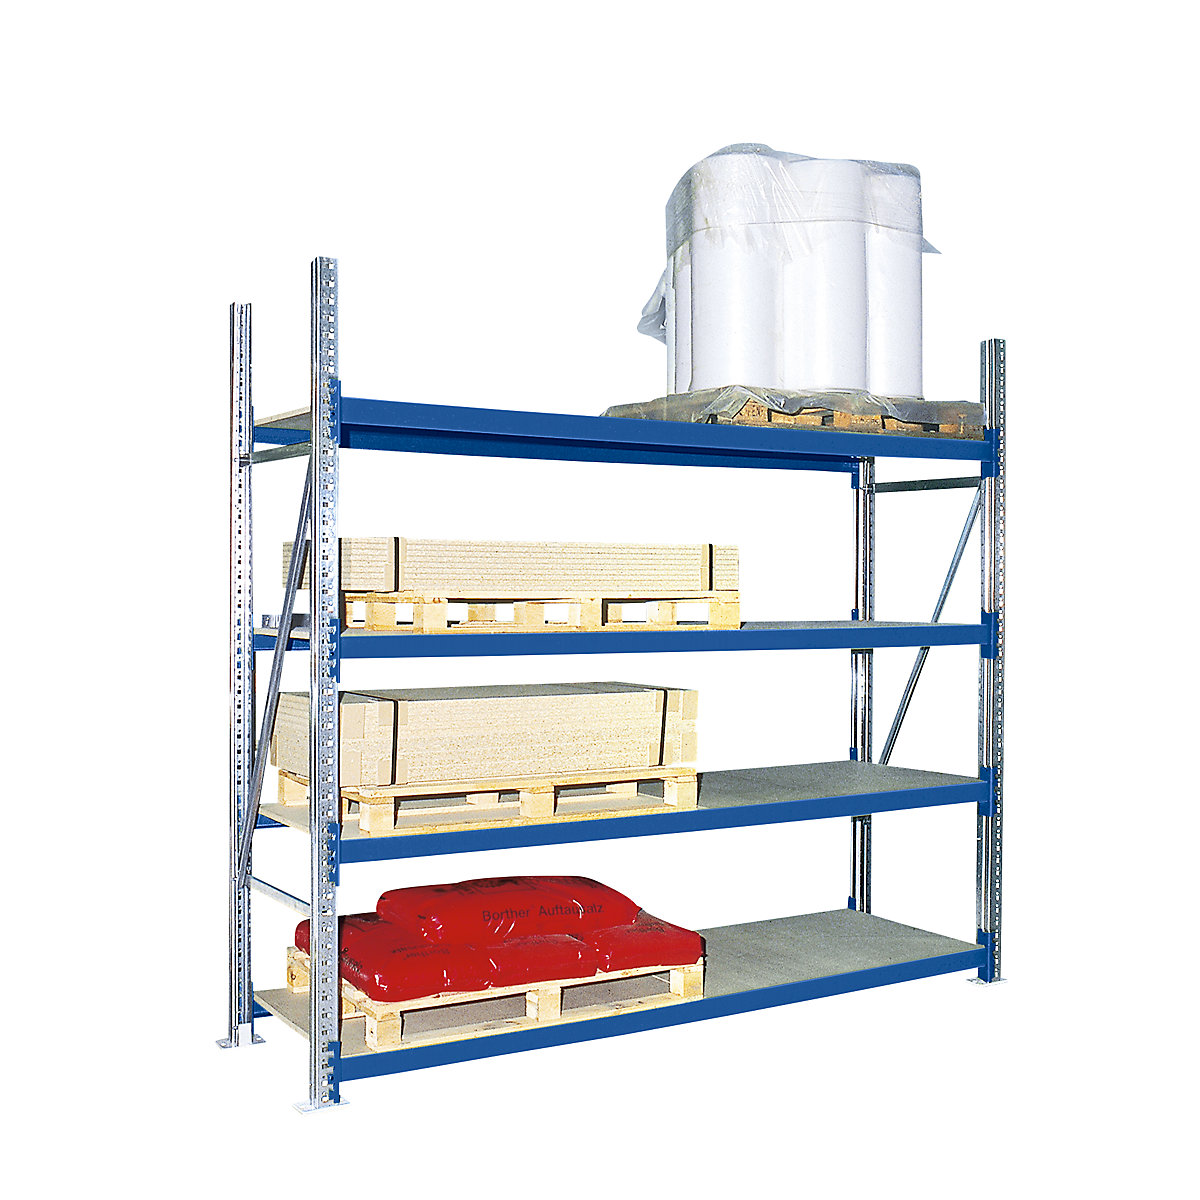 Wide span shelving unit with moulded chipboard shelves – eurokraft pro, depth 600 mm, cross beam length 2700 mm, height 2500 mm, standard shelf unit, blue RAL 5010